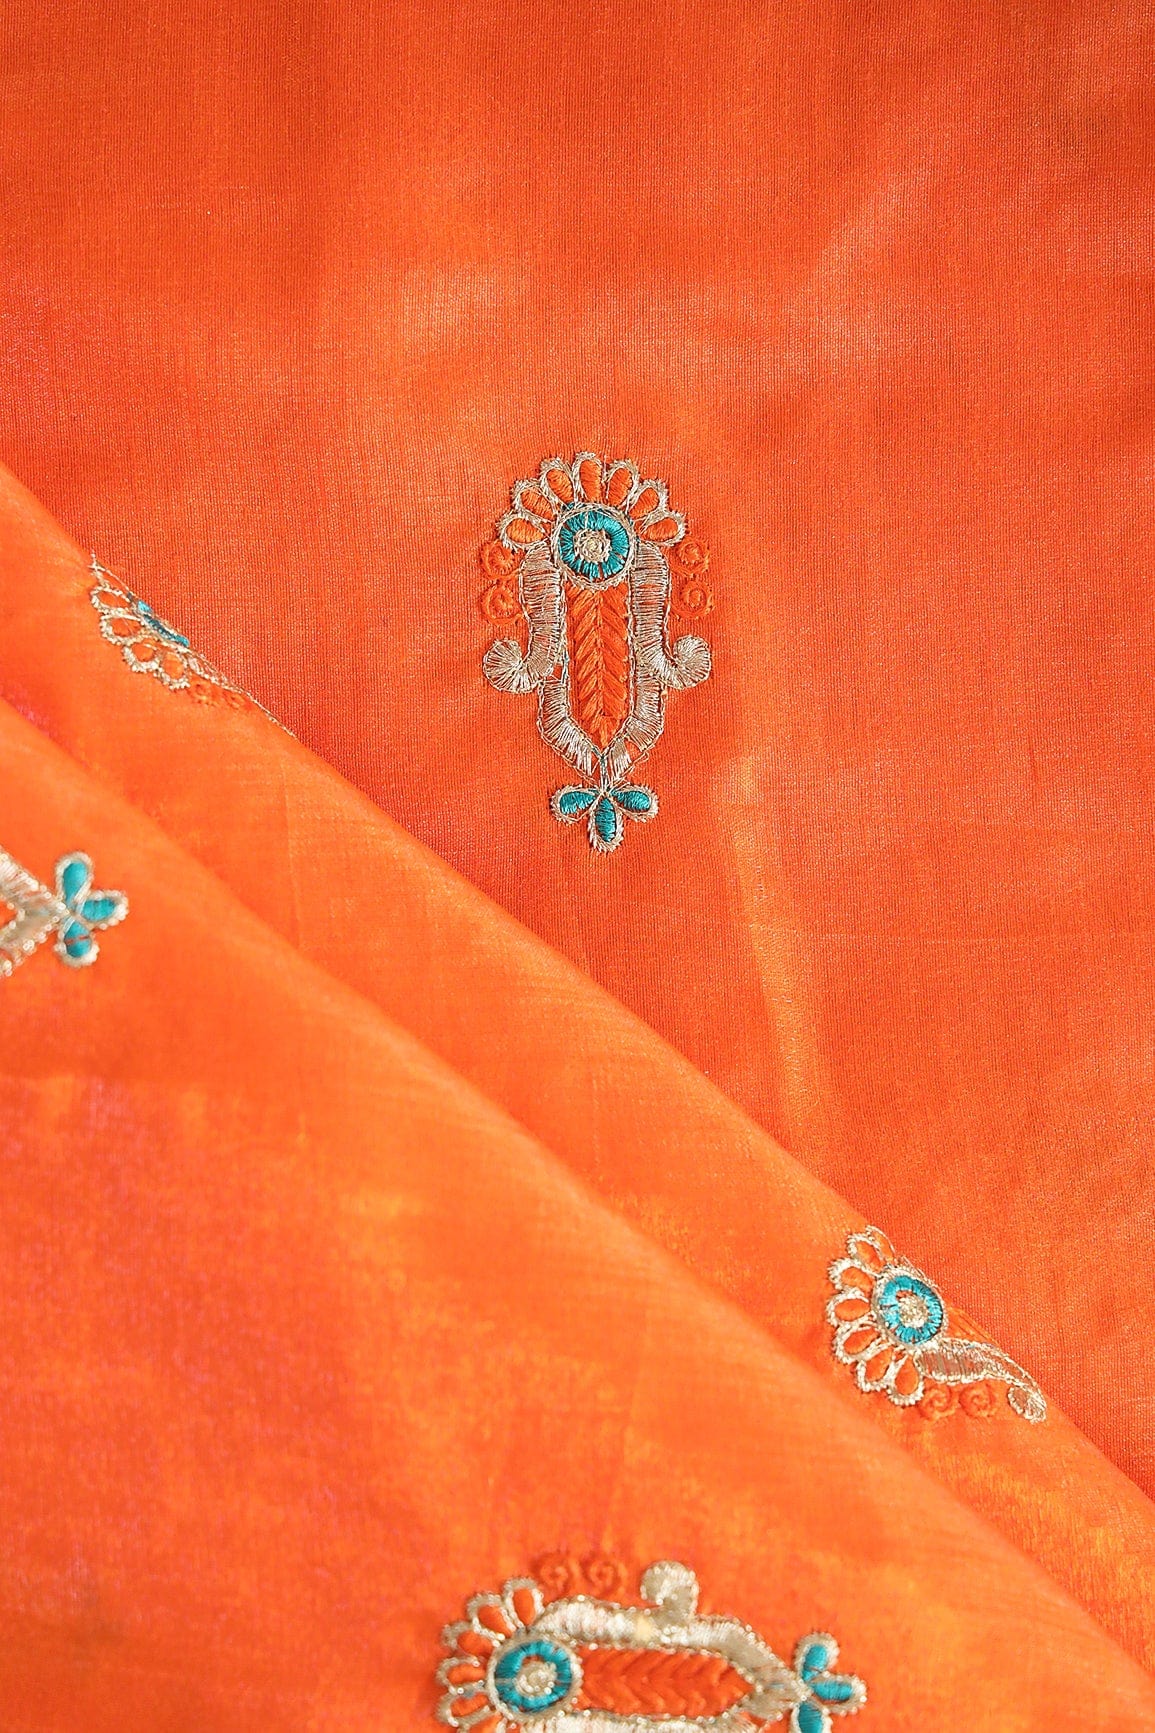 doeraa Banarasi Fabrics Orange Thread With Gold Zari Motif Embroidery On Orange Banglori Satin Fabric